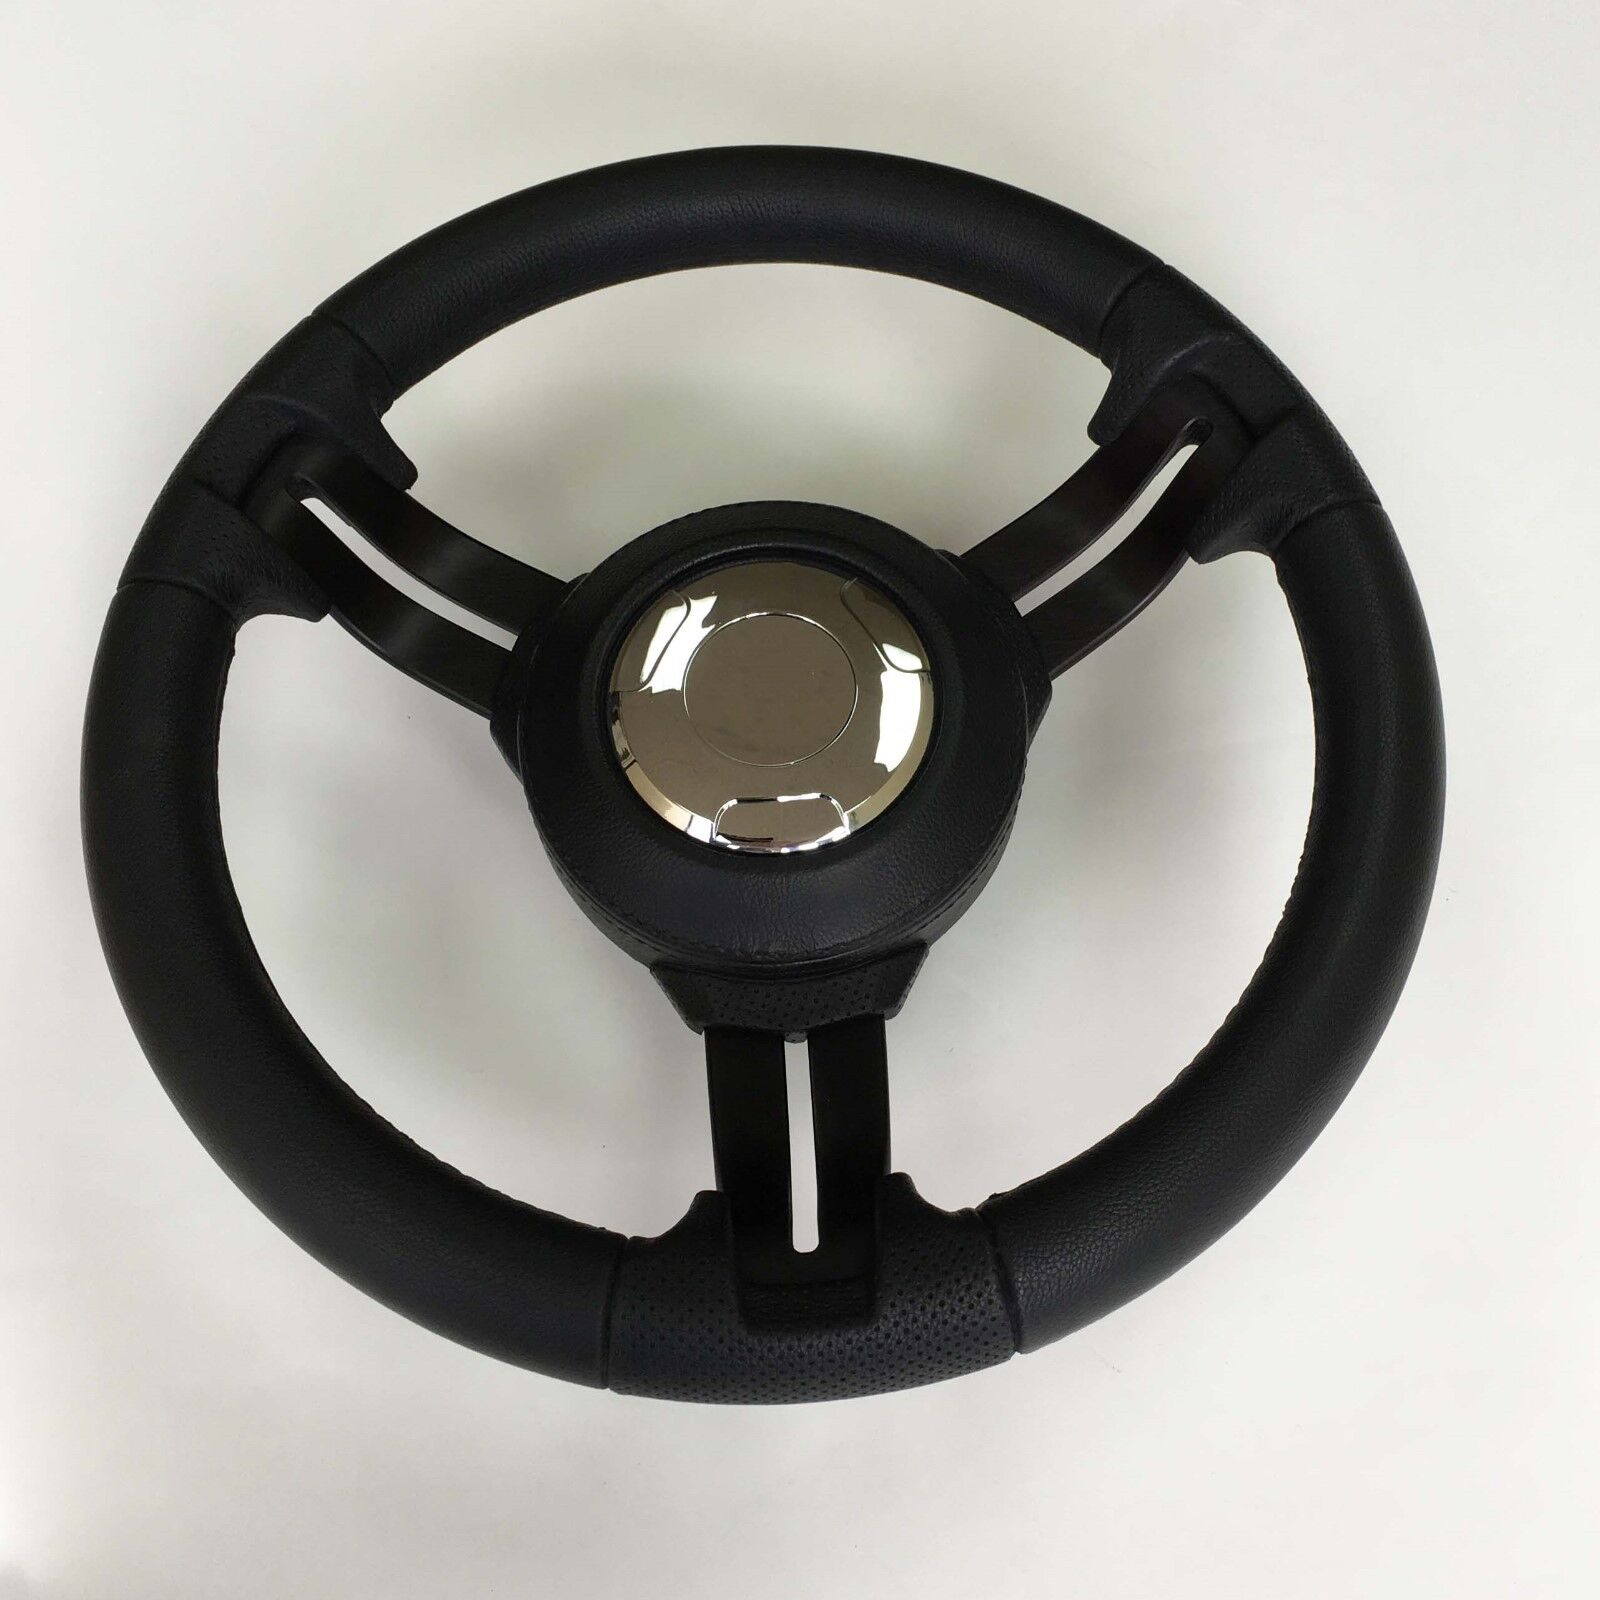 New OEM Gussi Boat Steering Wheel M500 All Black Plastic /& Soft Touch Rim